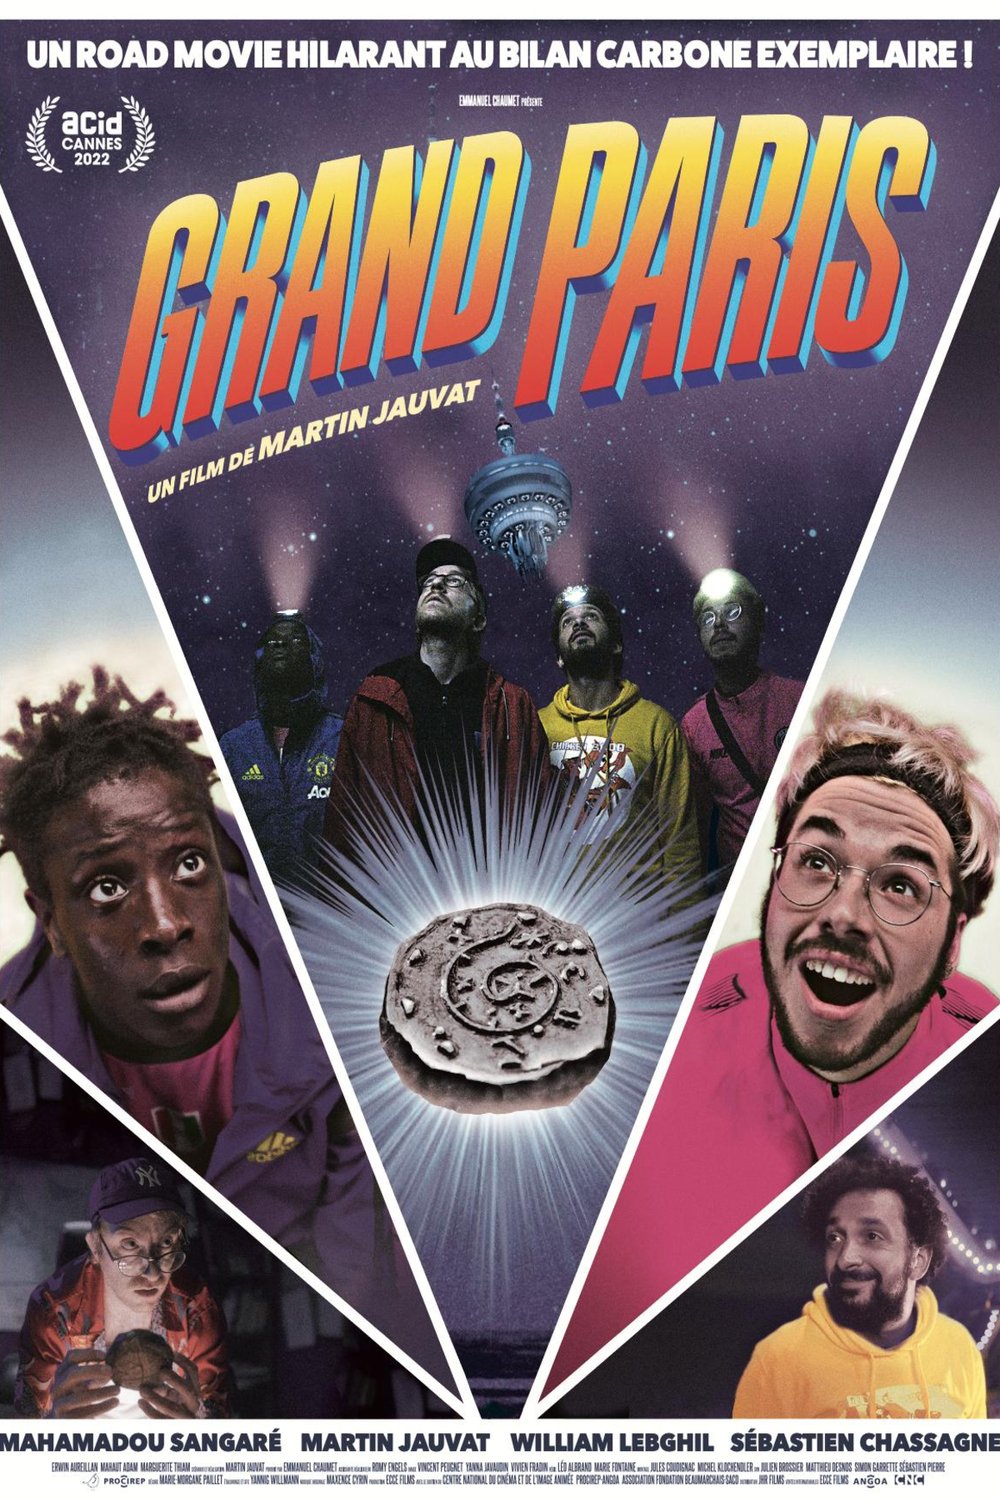 Poster of the movie Grand Paris